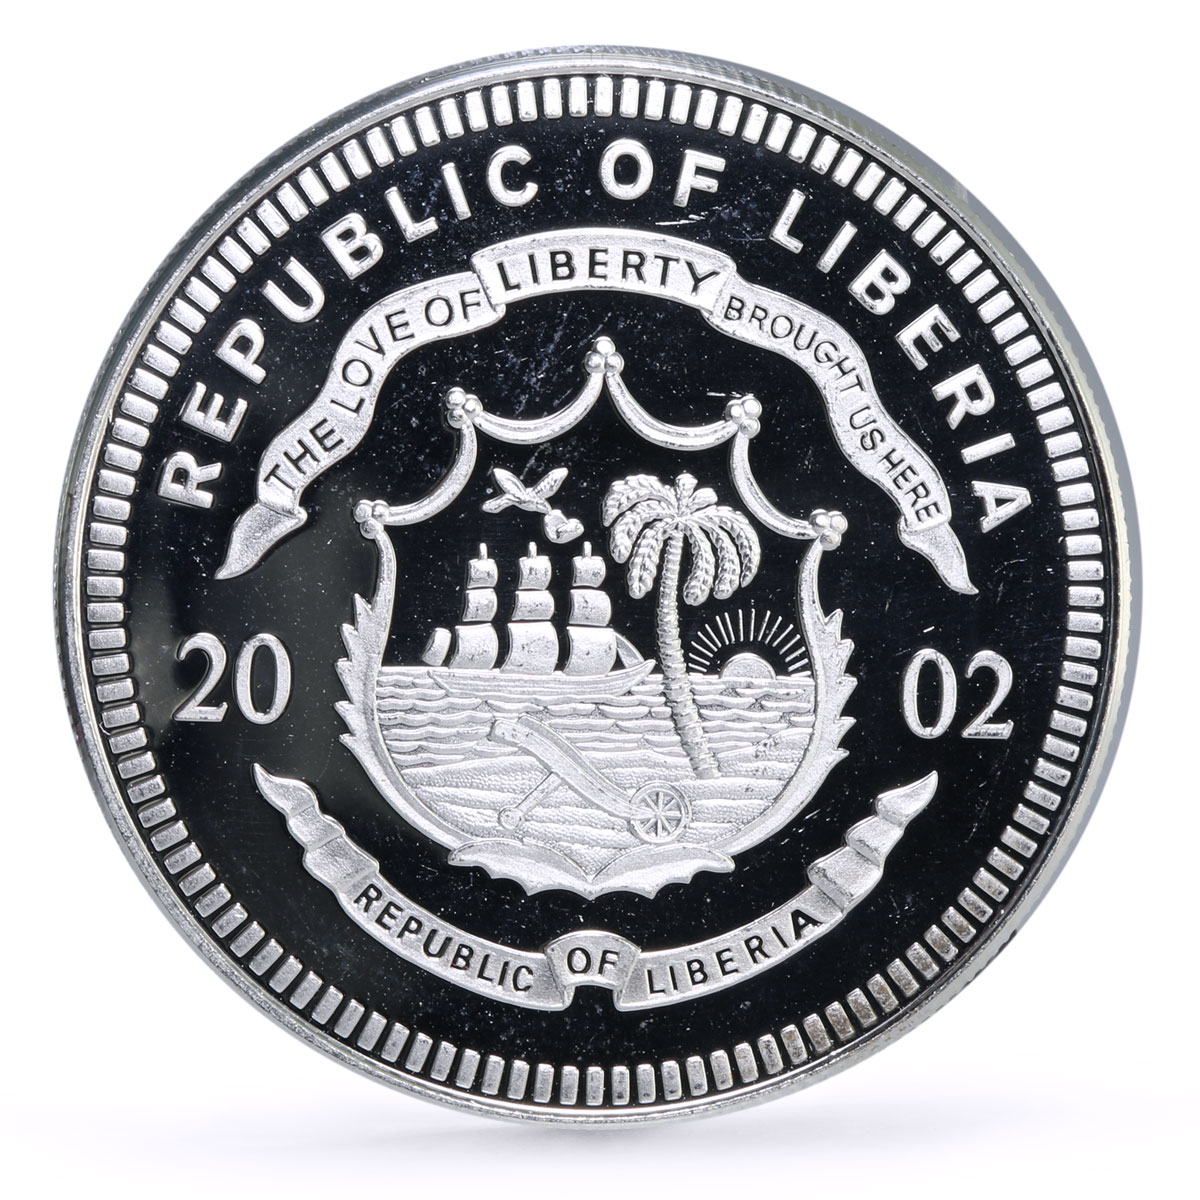 Liberia 20 dollars Railways Railroads Trains Kreigslok proof silver coin 2002